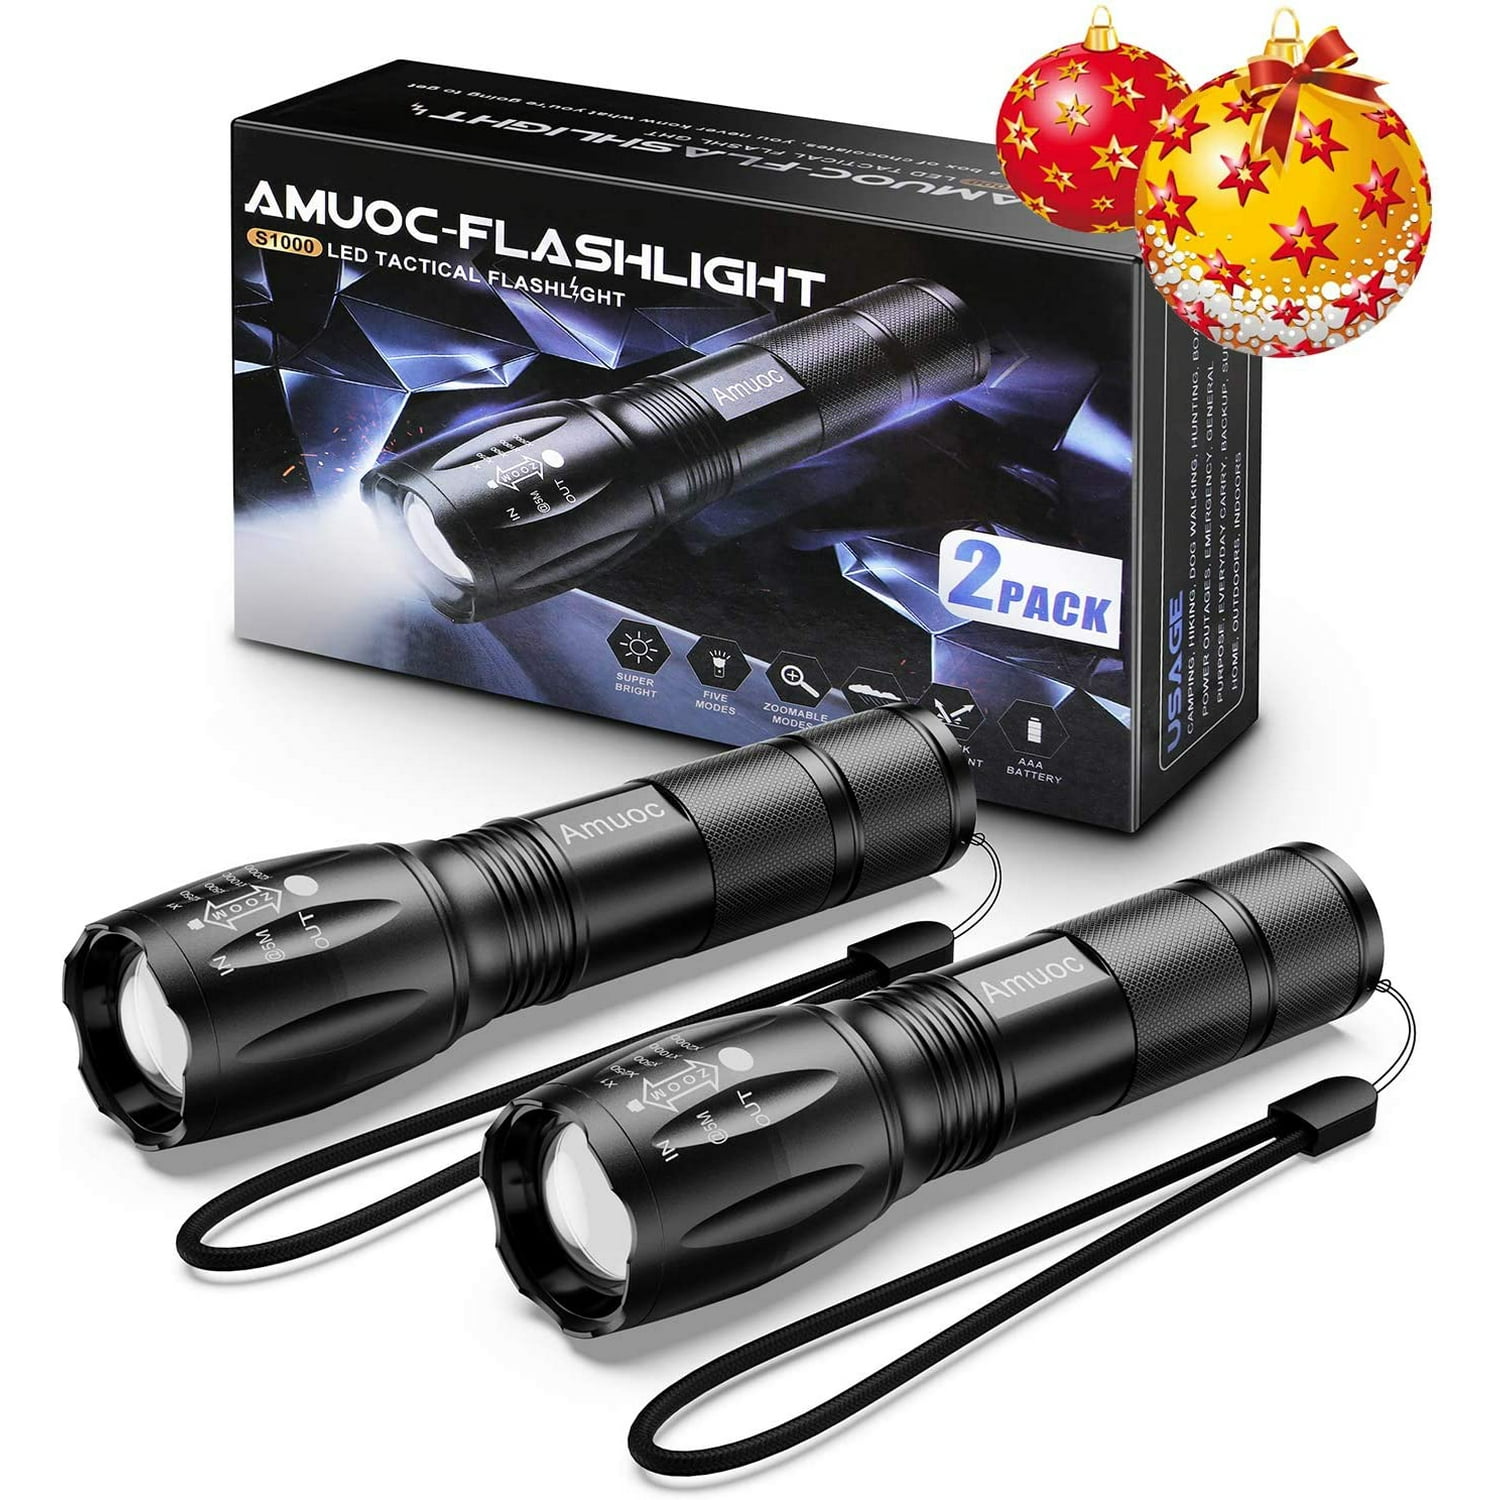 2-Pack Amuoc LED S2000 Lumens Flashlights, Outdoor Waterproof $5.67 Free S H w/ Walmart or $35